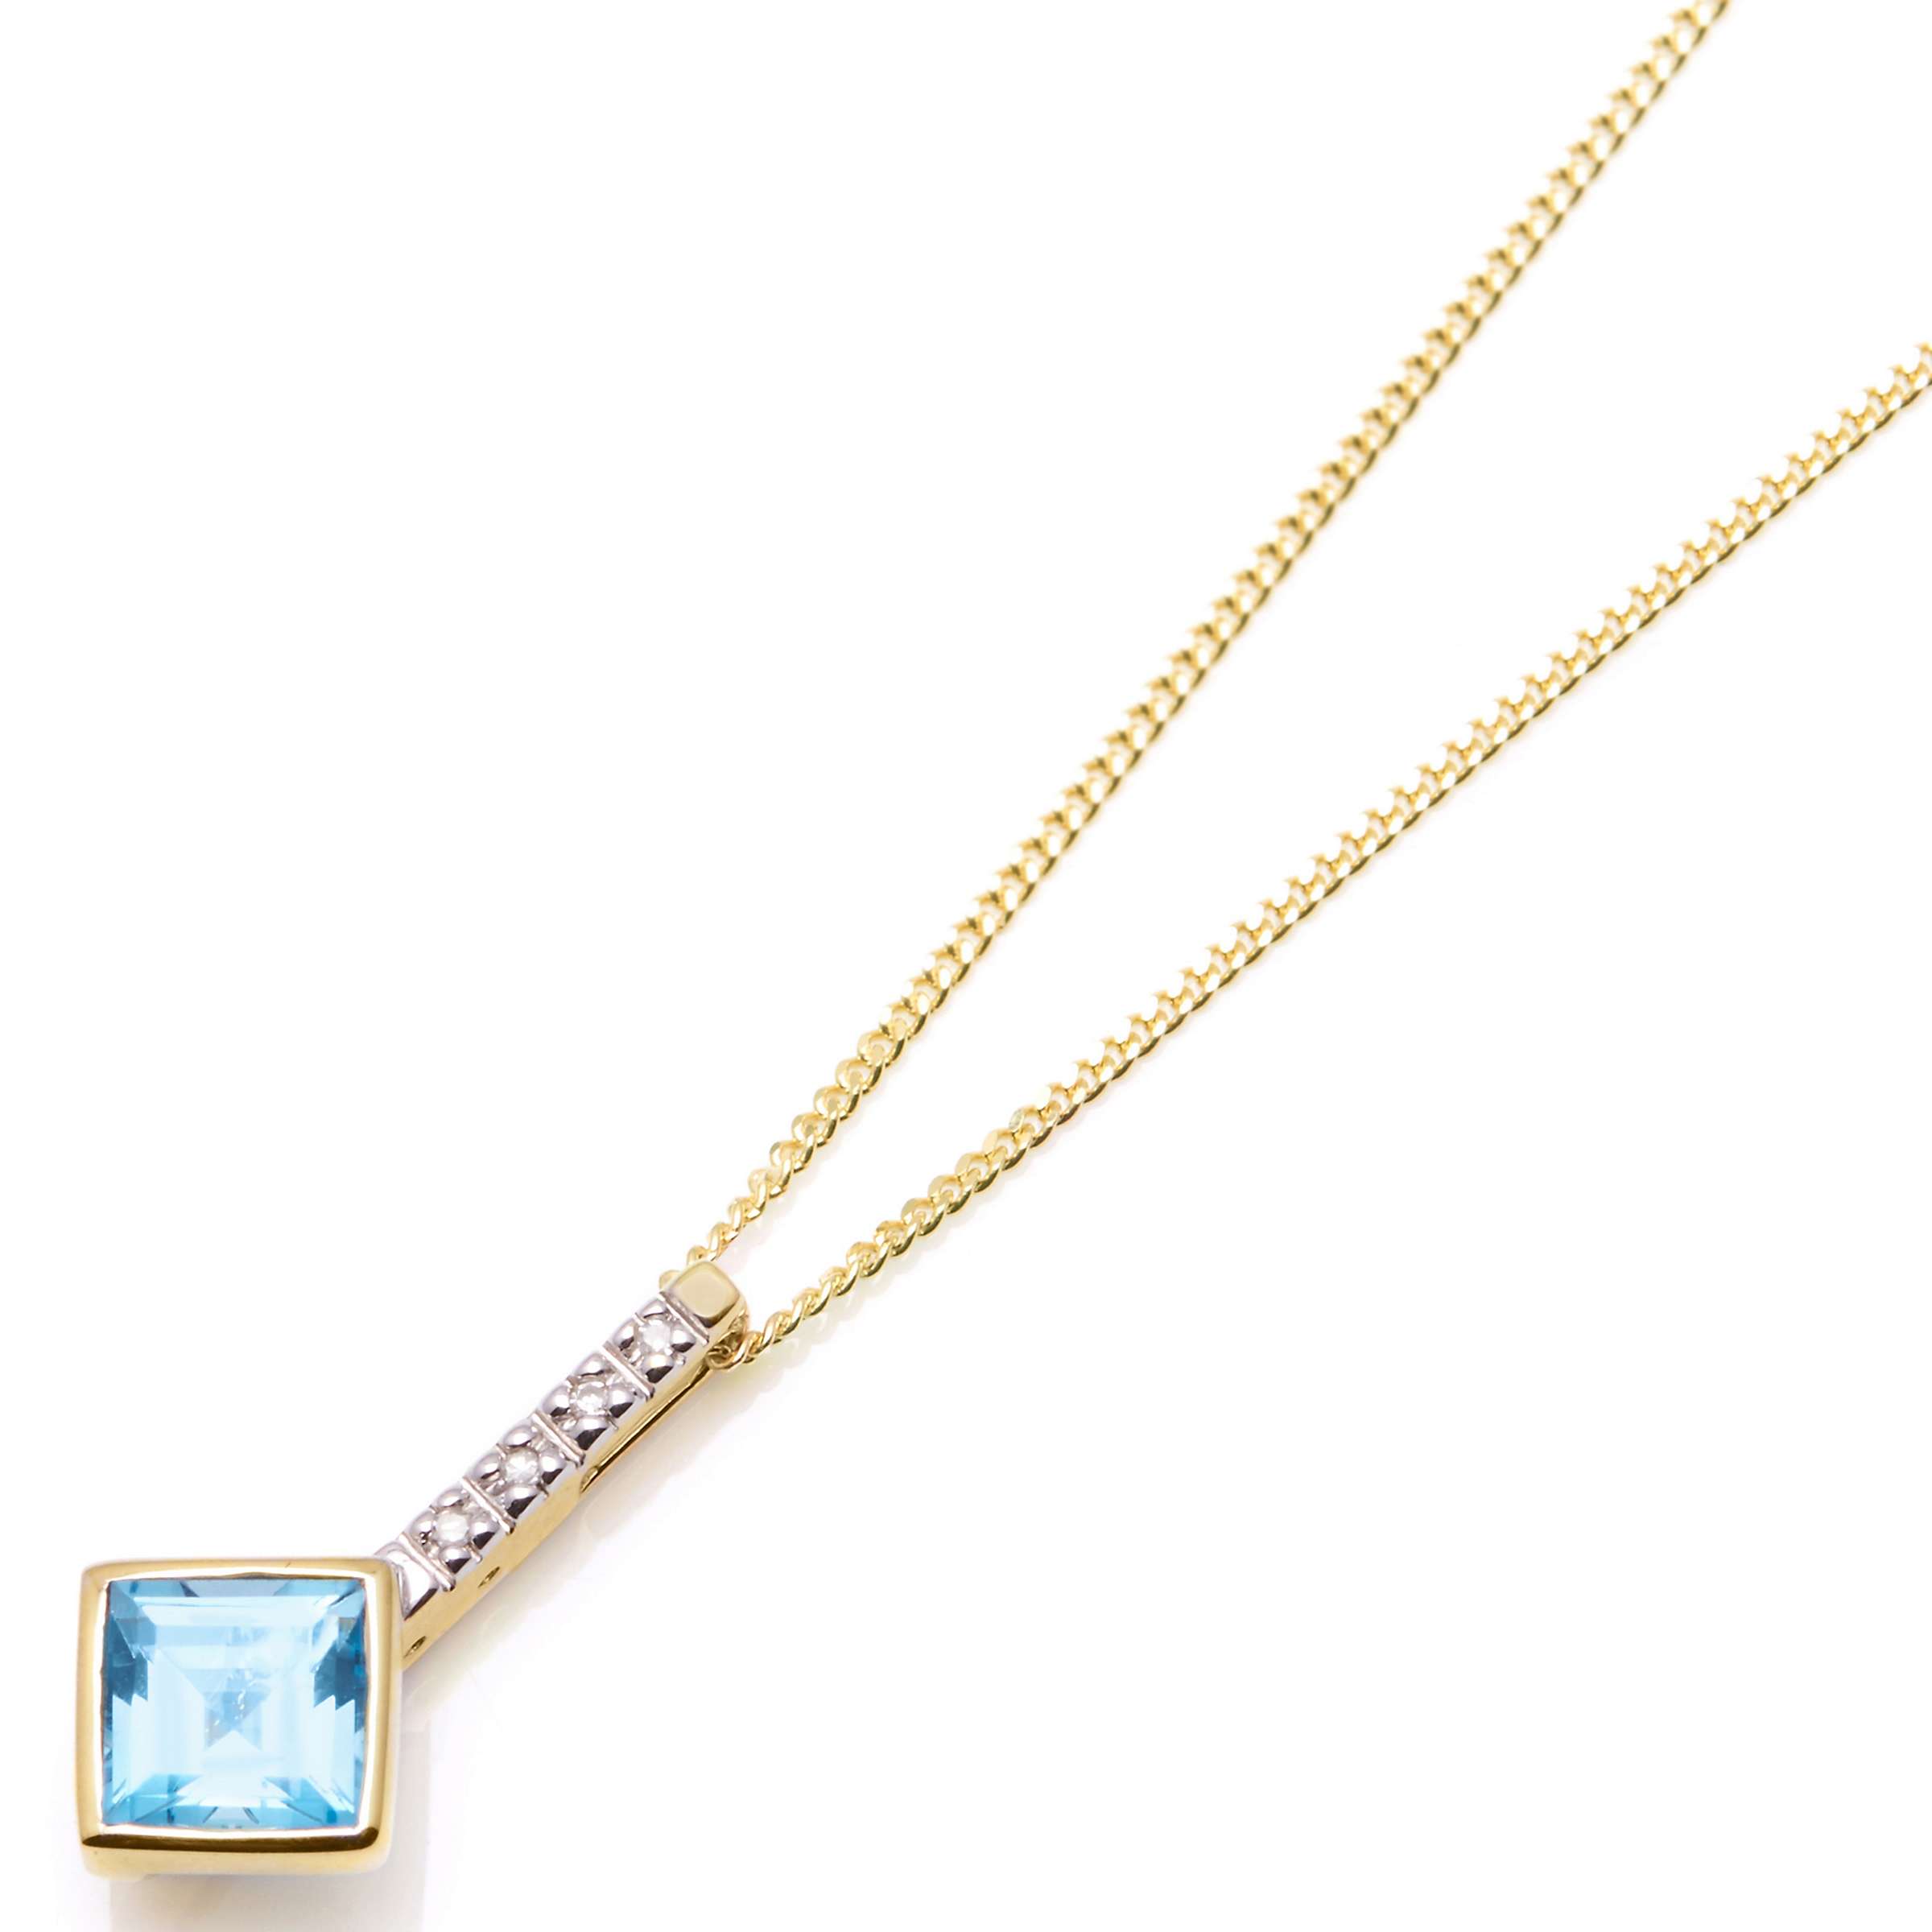 Buy A B Davis 9ct Gold Princess Cut Semi Precious Stone and Diamond Pendant Necklace, Blue Topaz Online at johnlewis.com